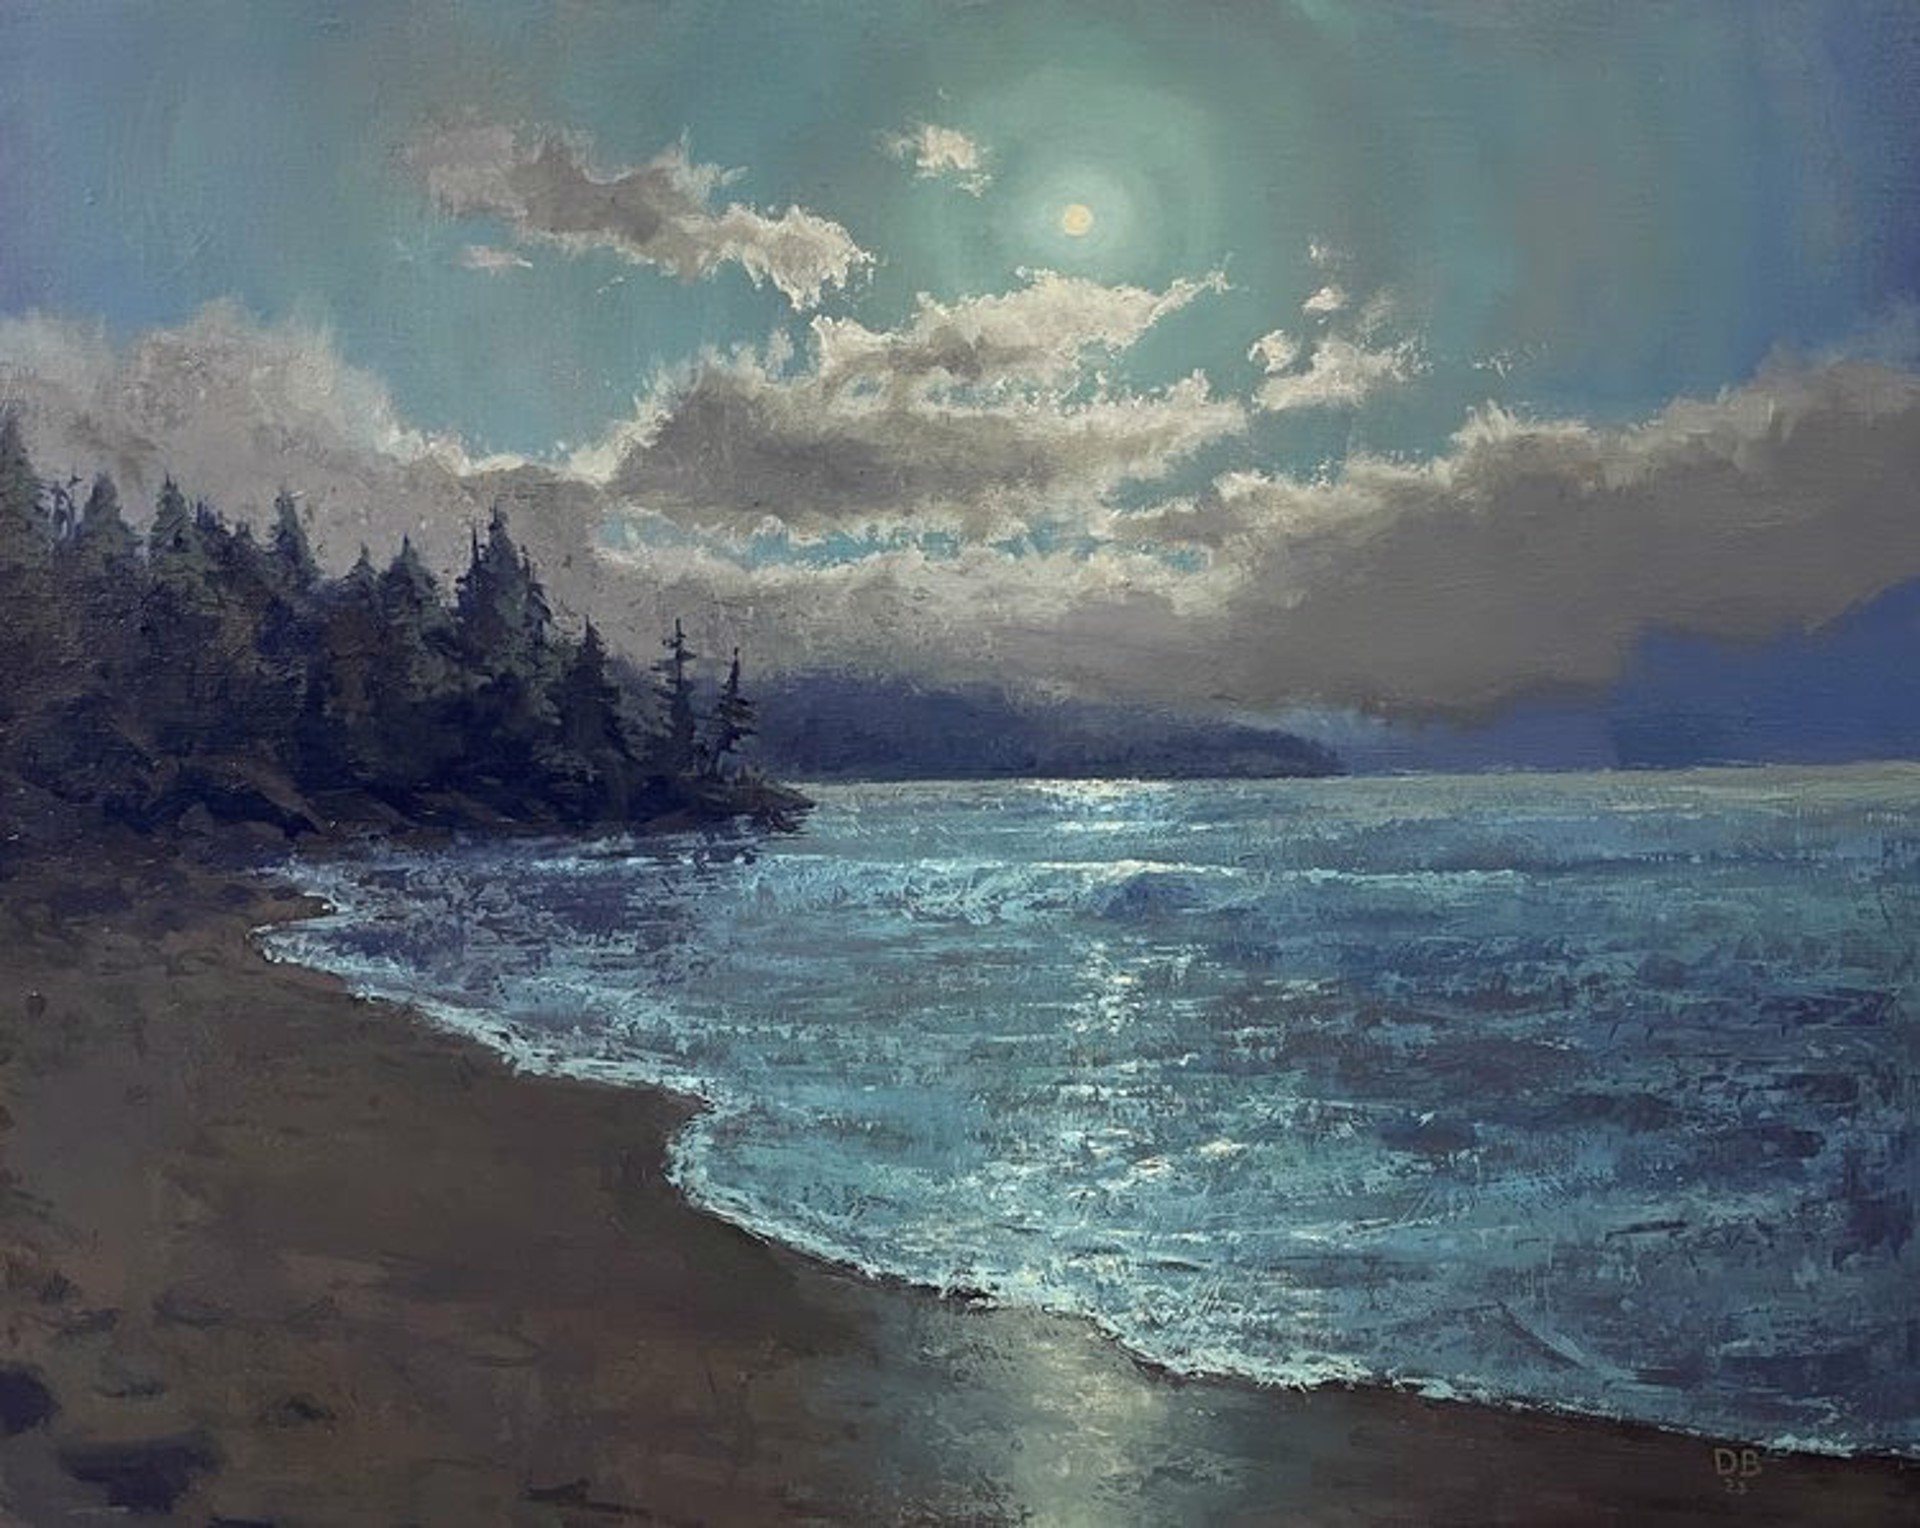 Moon and Sea by Daniel Bailey